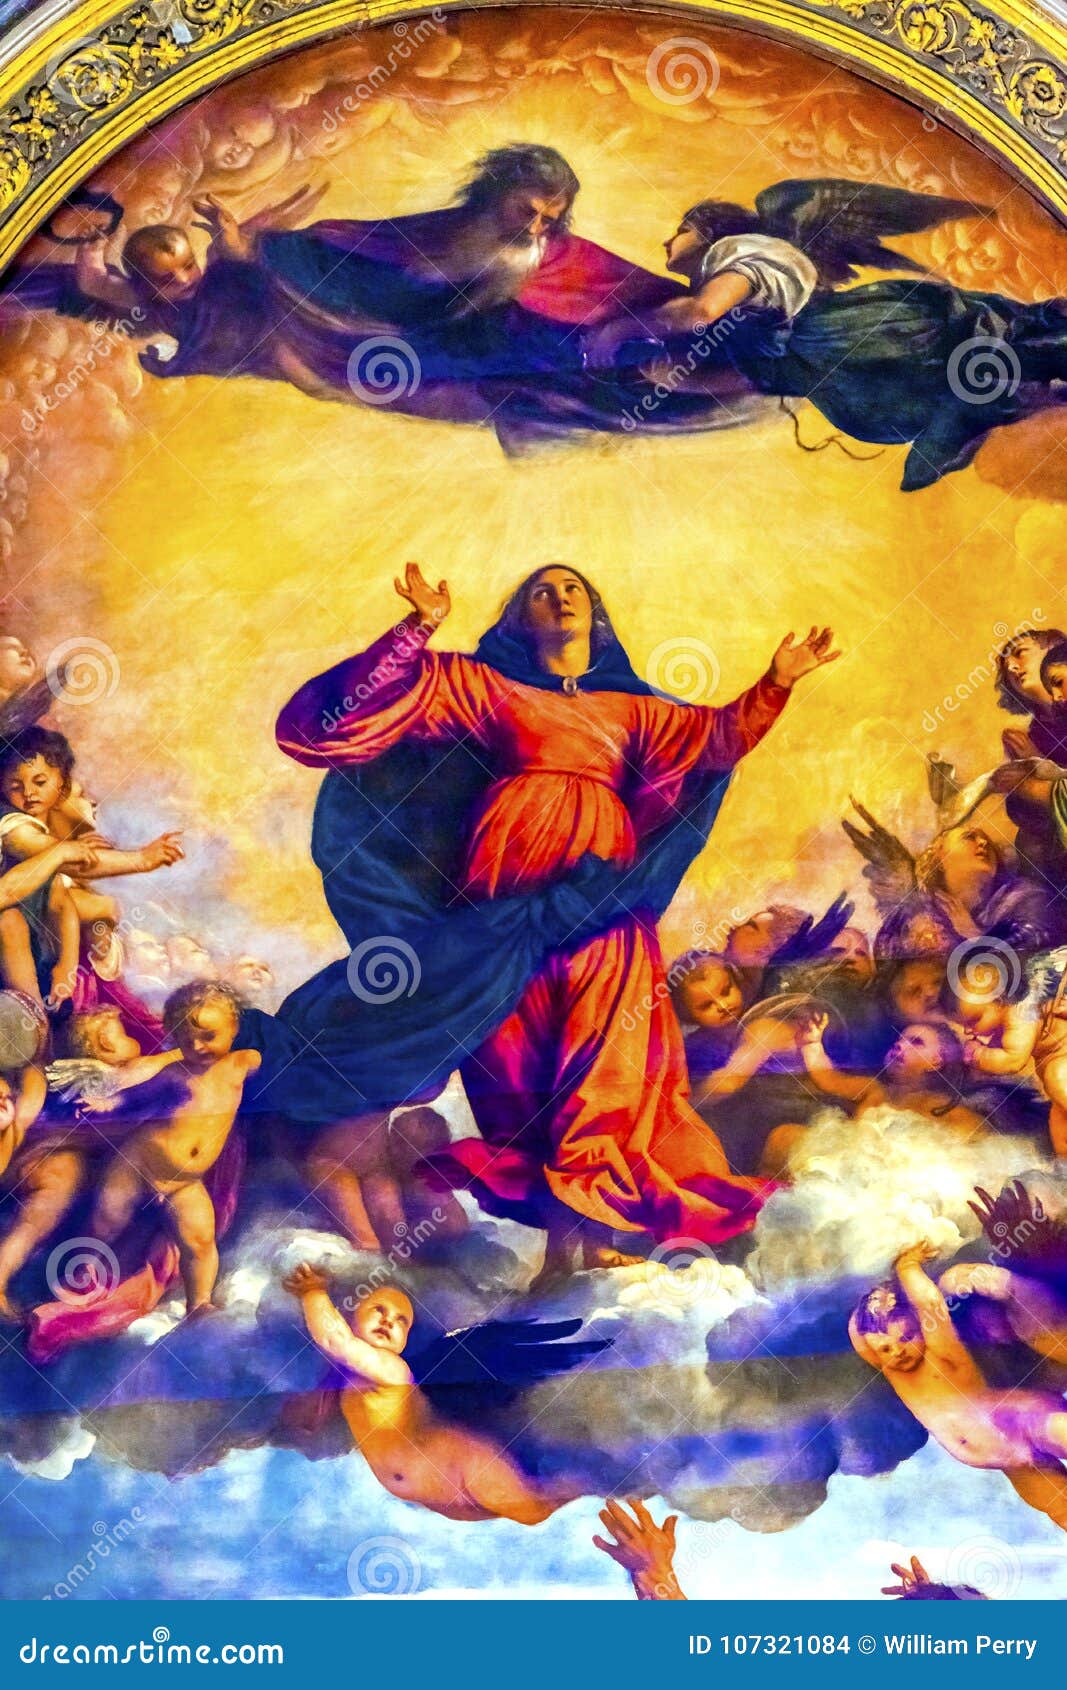 titian assumption mary painting santa maria gloriosa de frari ch